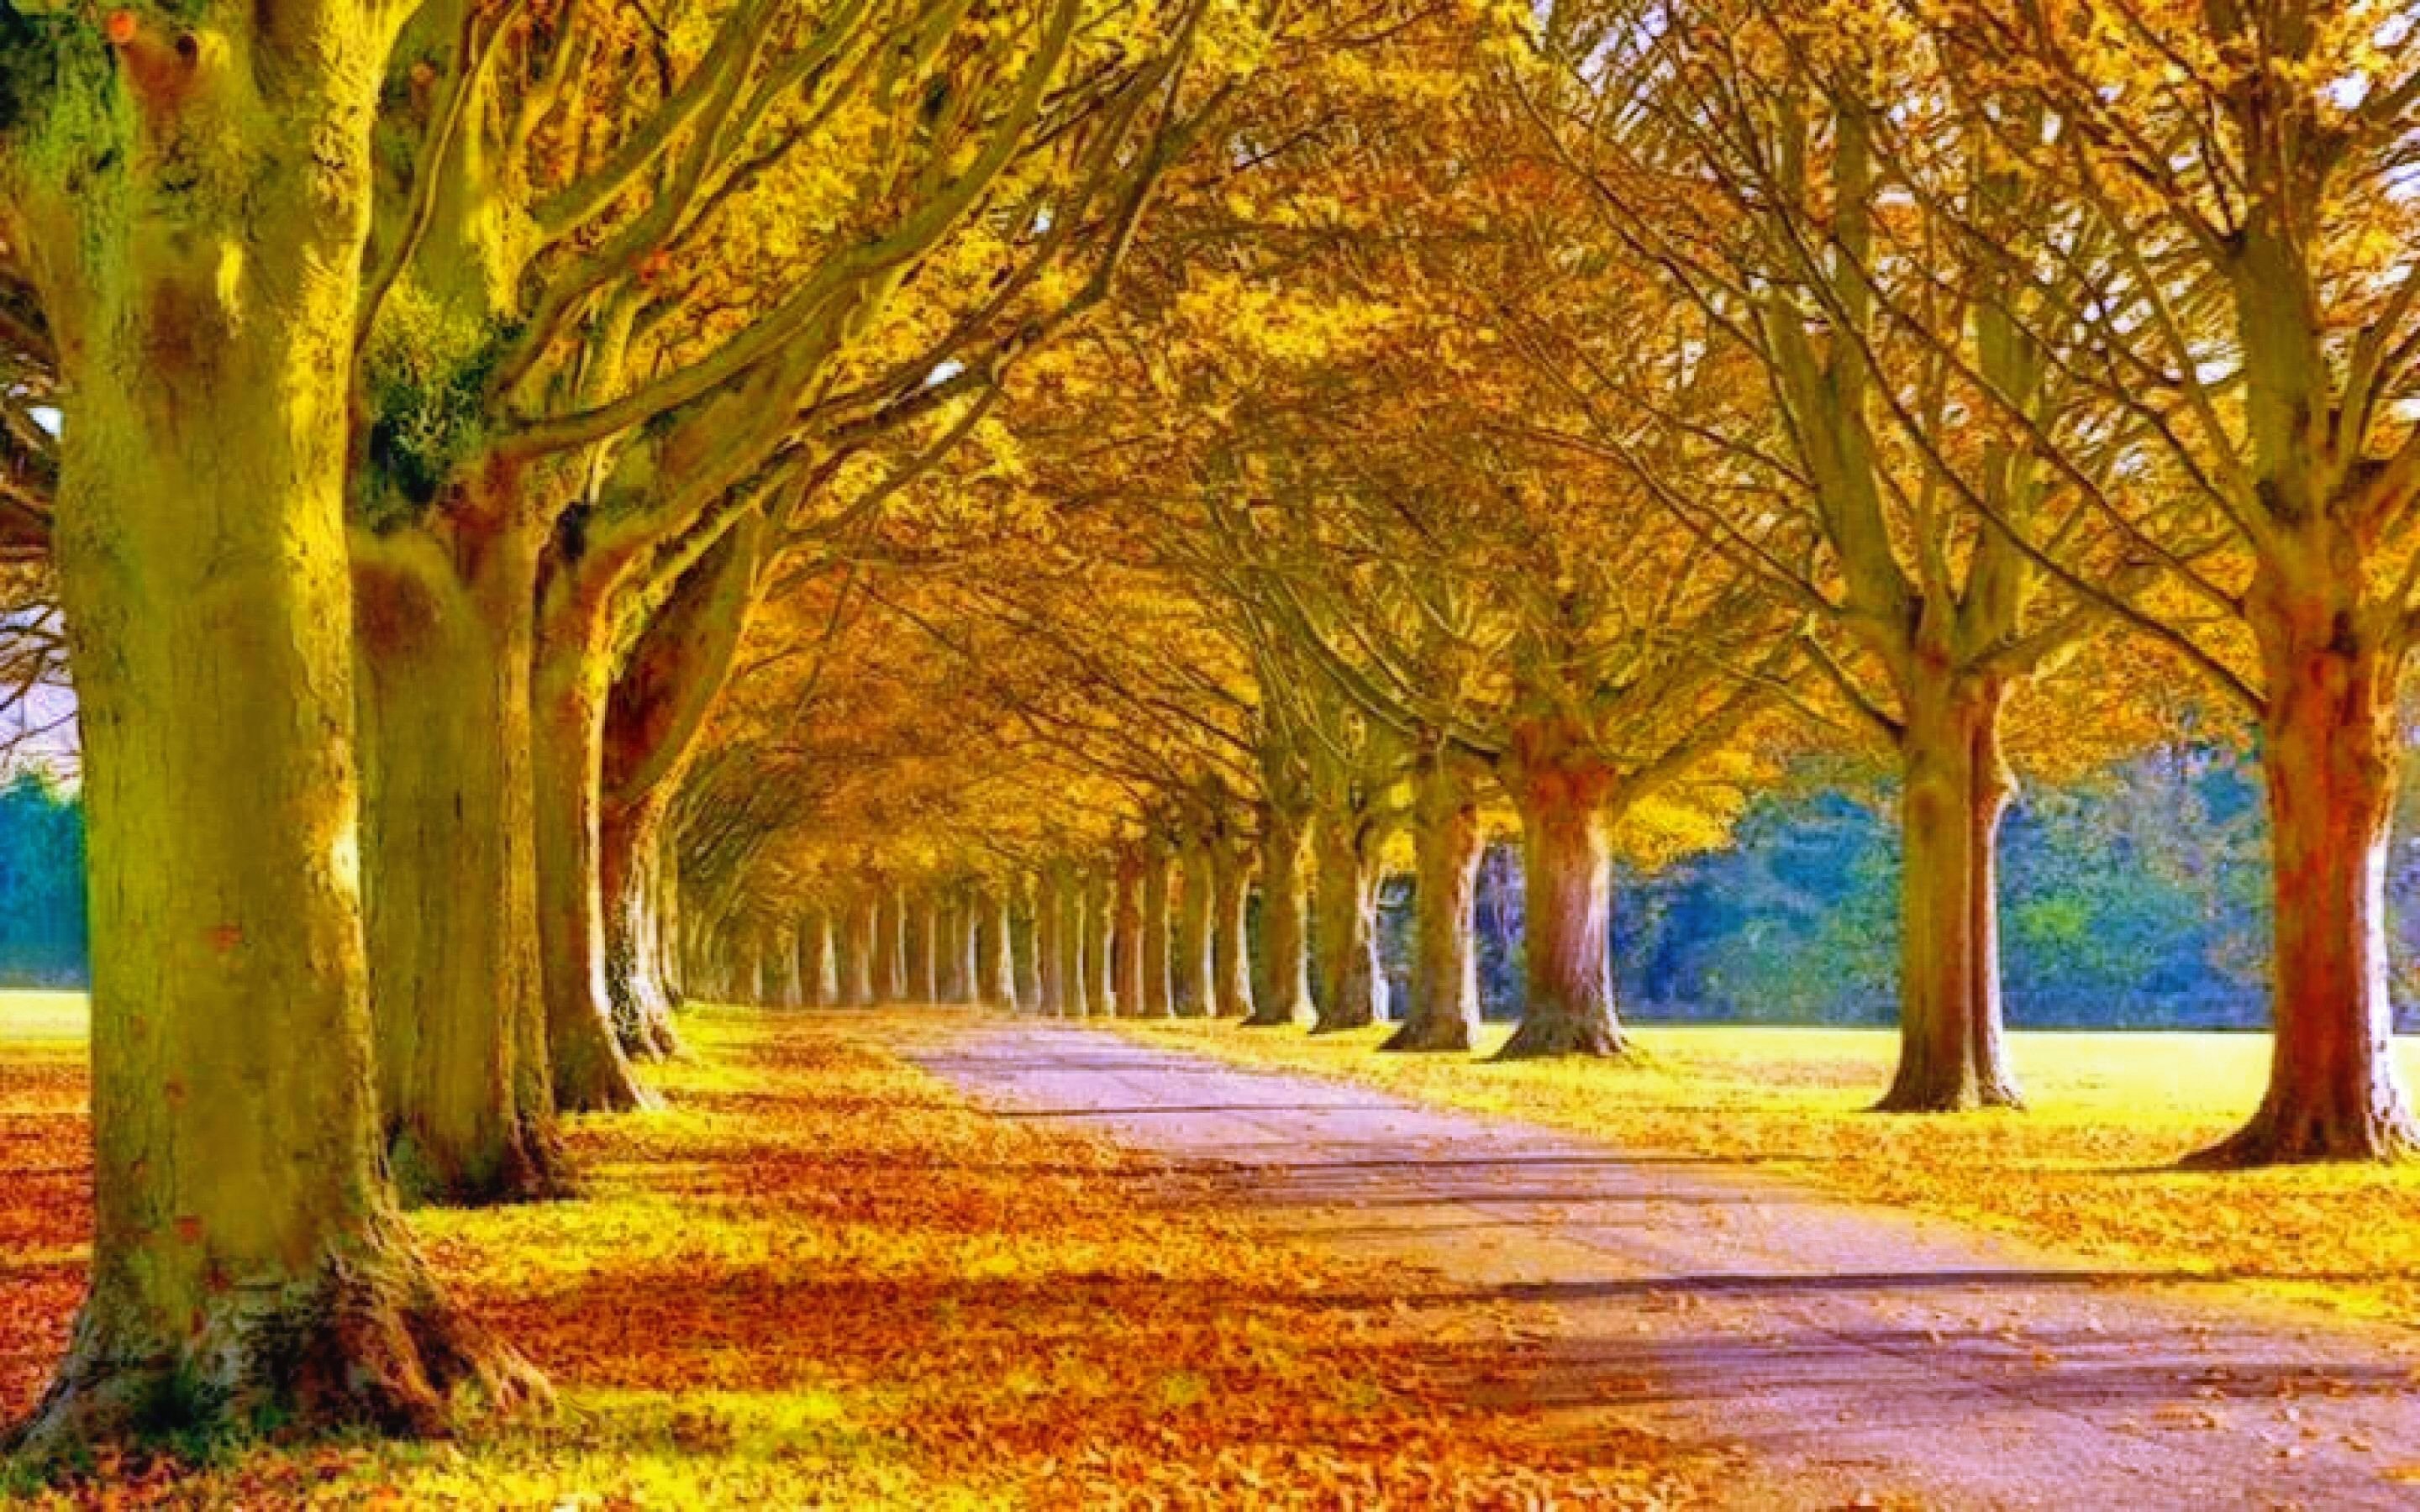 new wallpaper full hd,tree,natural landscape,nature,autumn,yellow